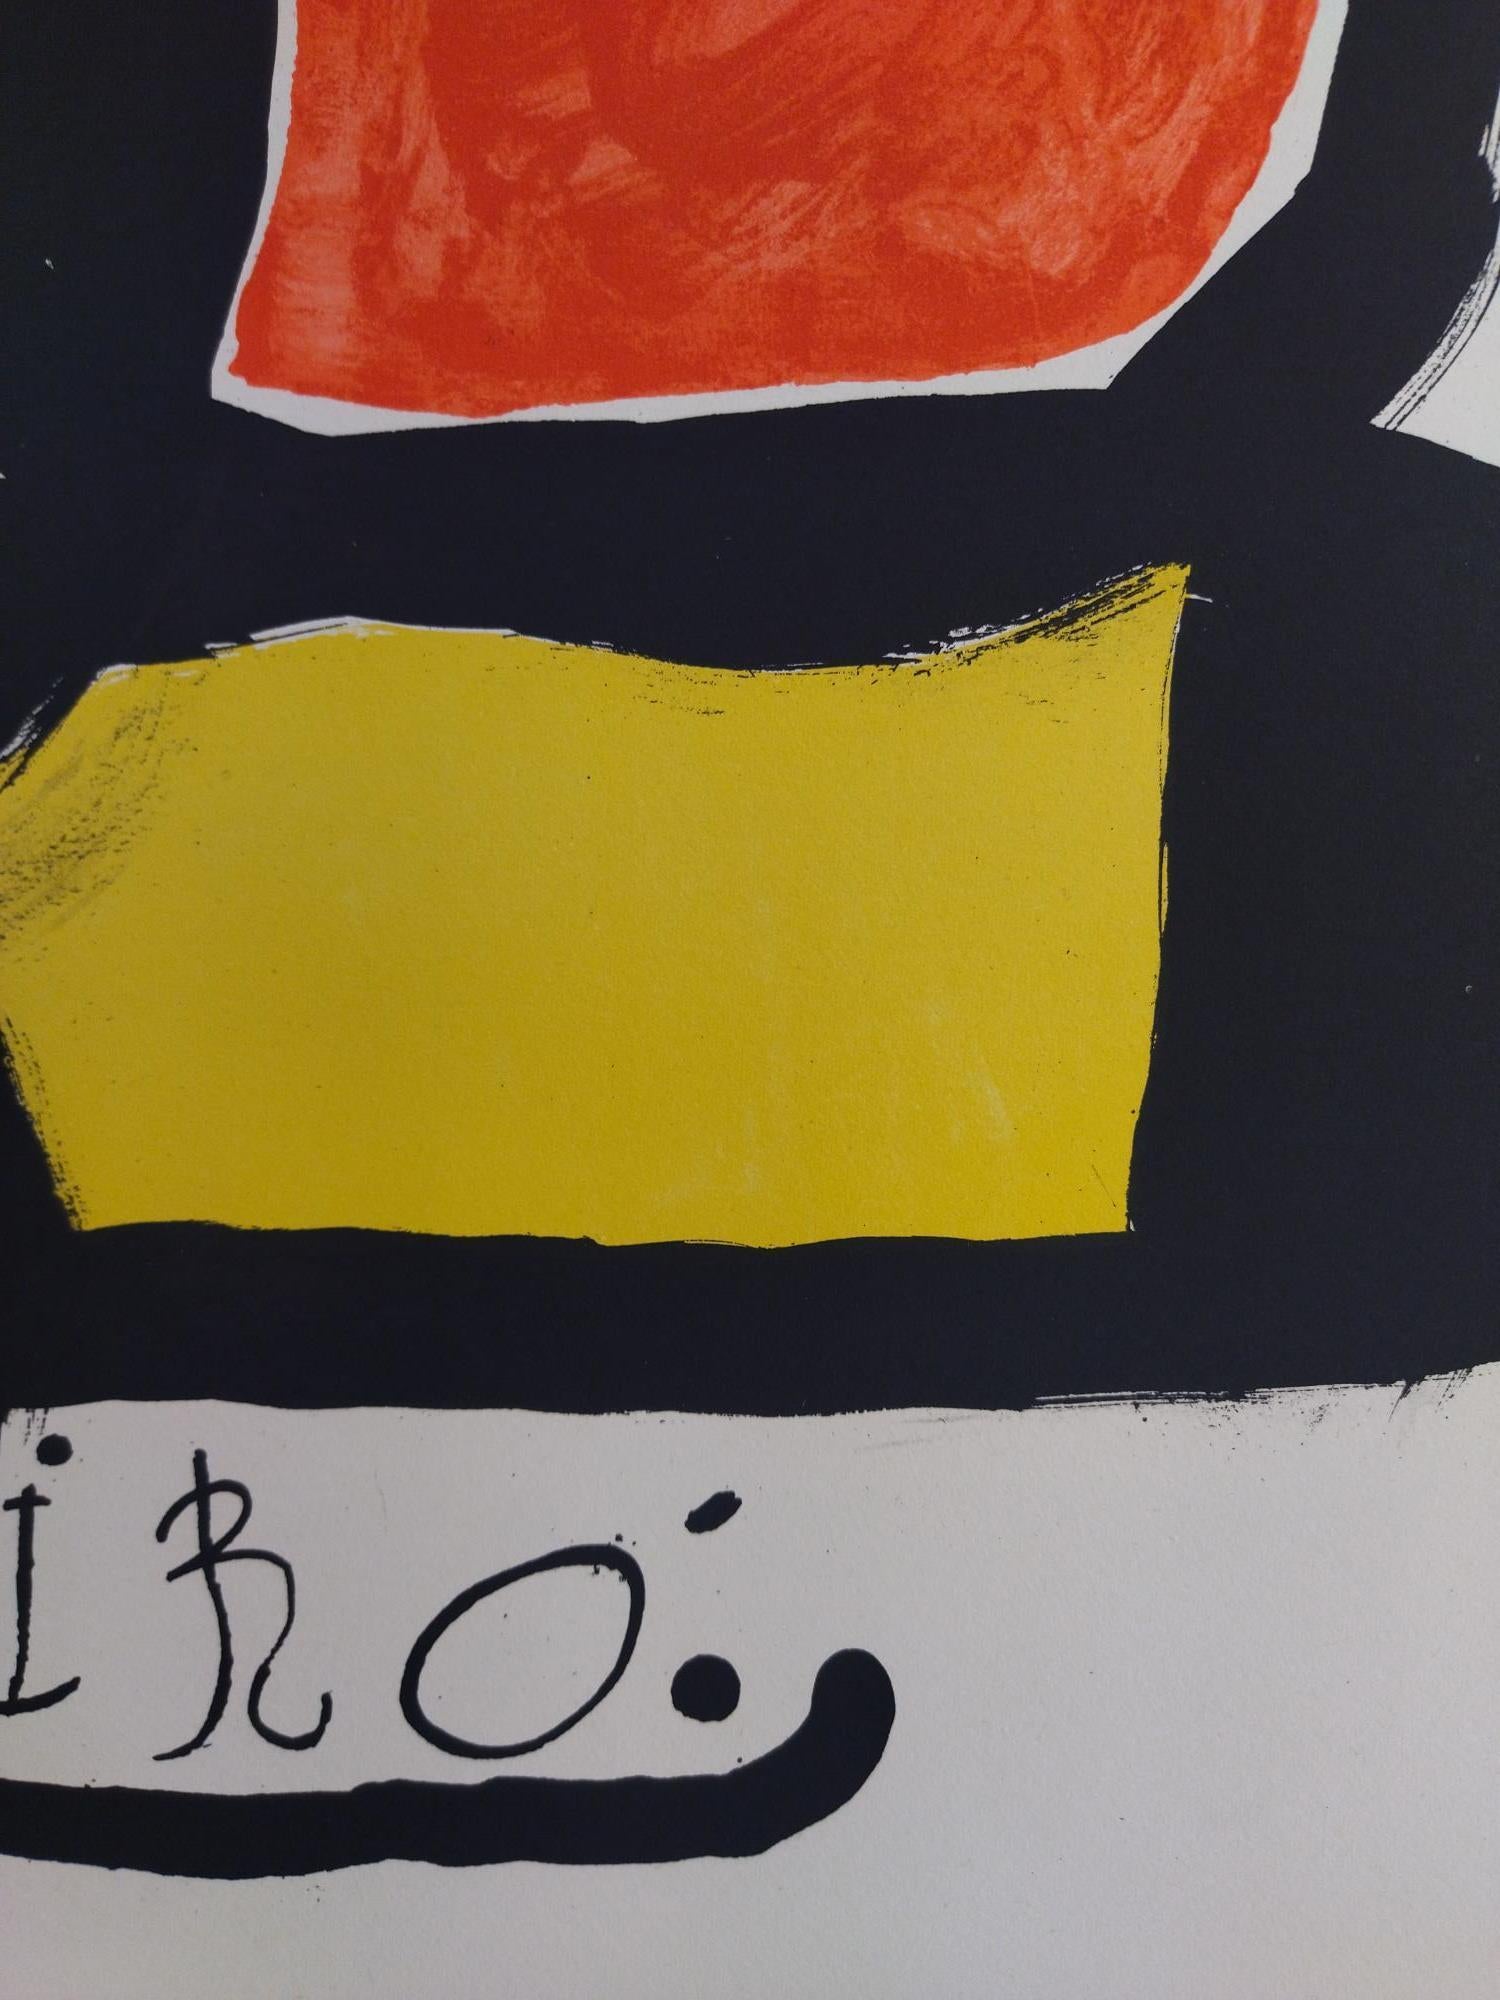 Miro 185. vertical. black. red. yellow.  TAPIZ DE TARRAGONA - Abstract Print by Joan Miró